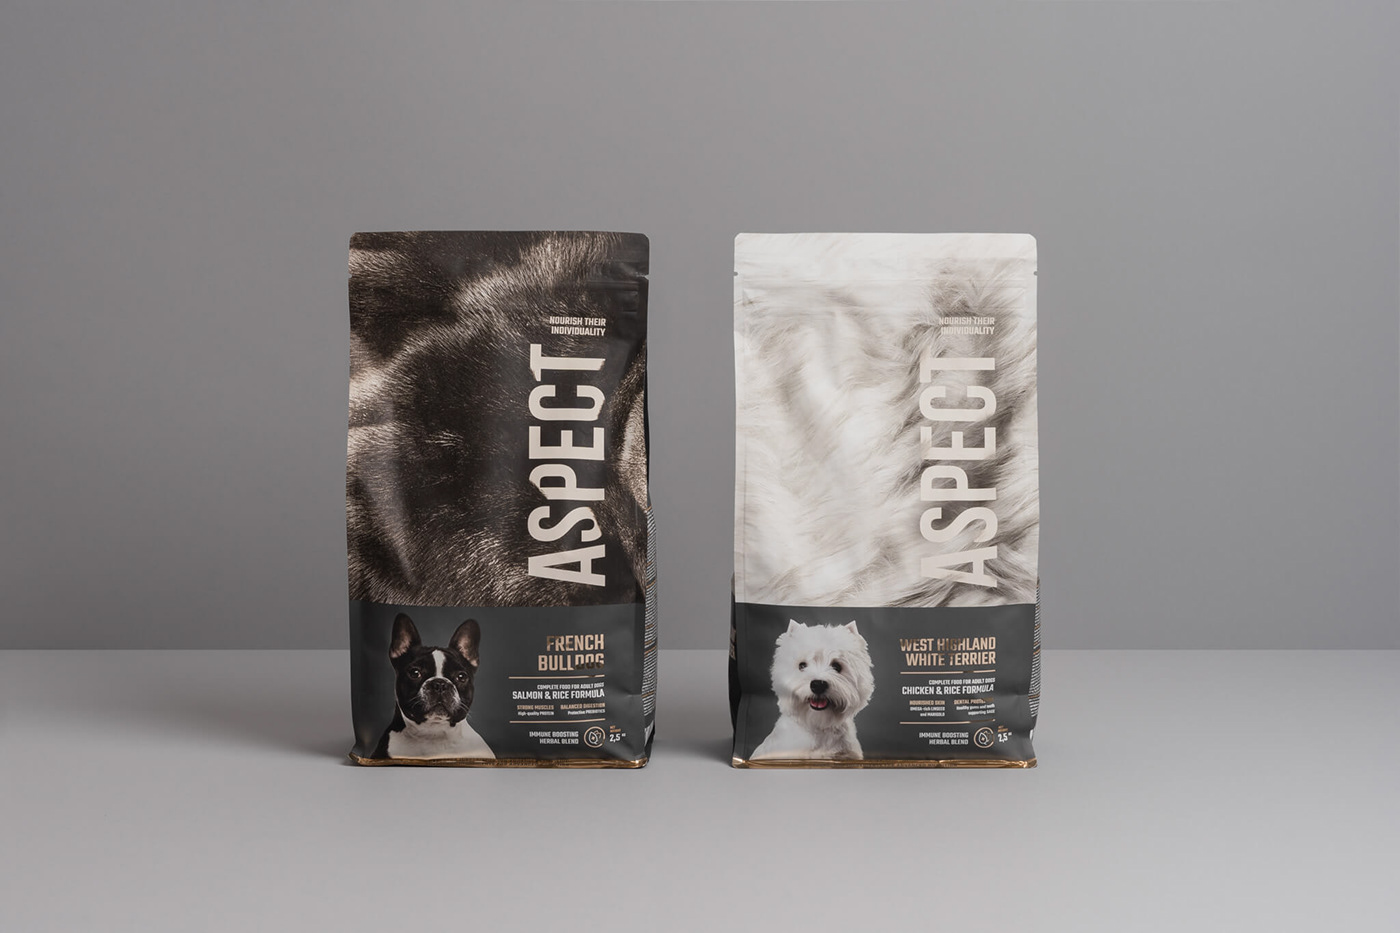 Breed design dog food Packaging packaging design Pet design product identity